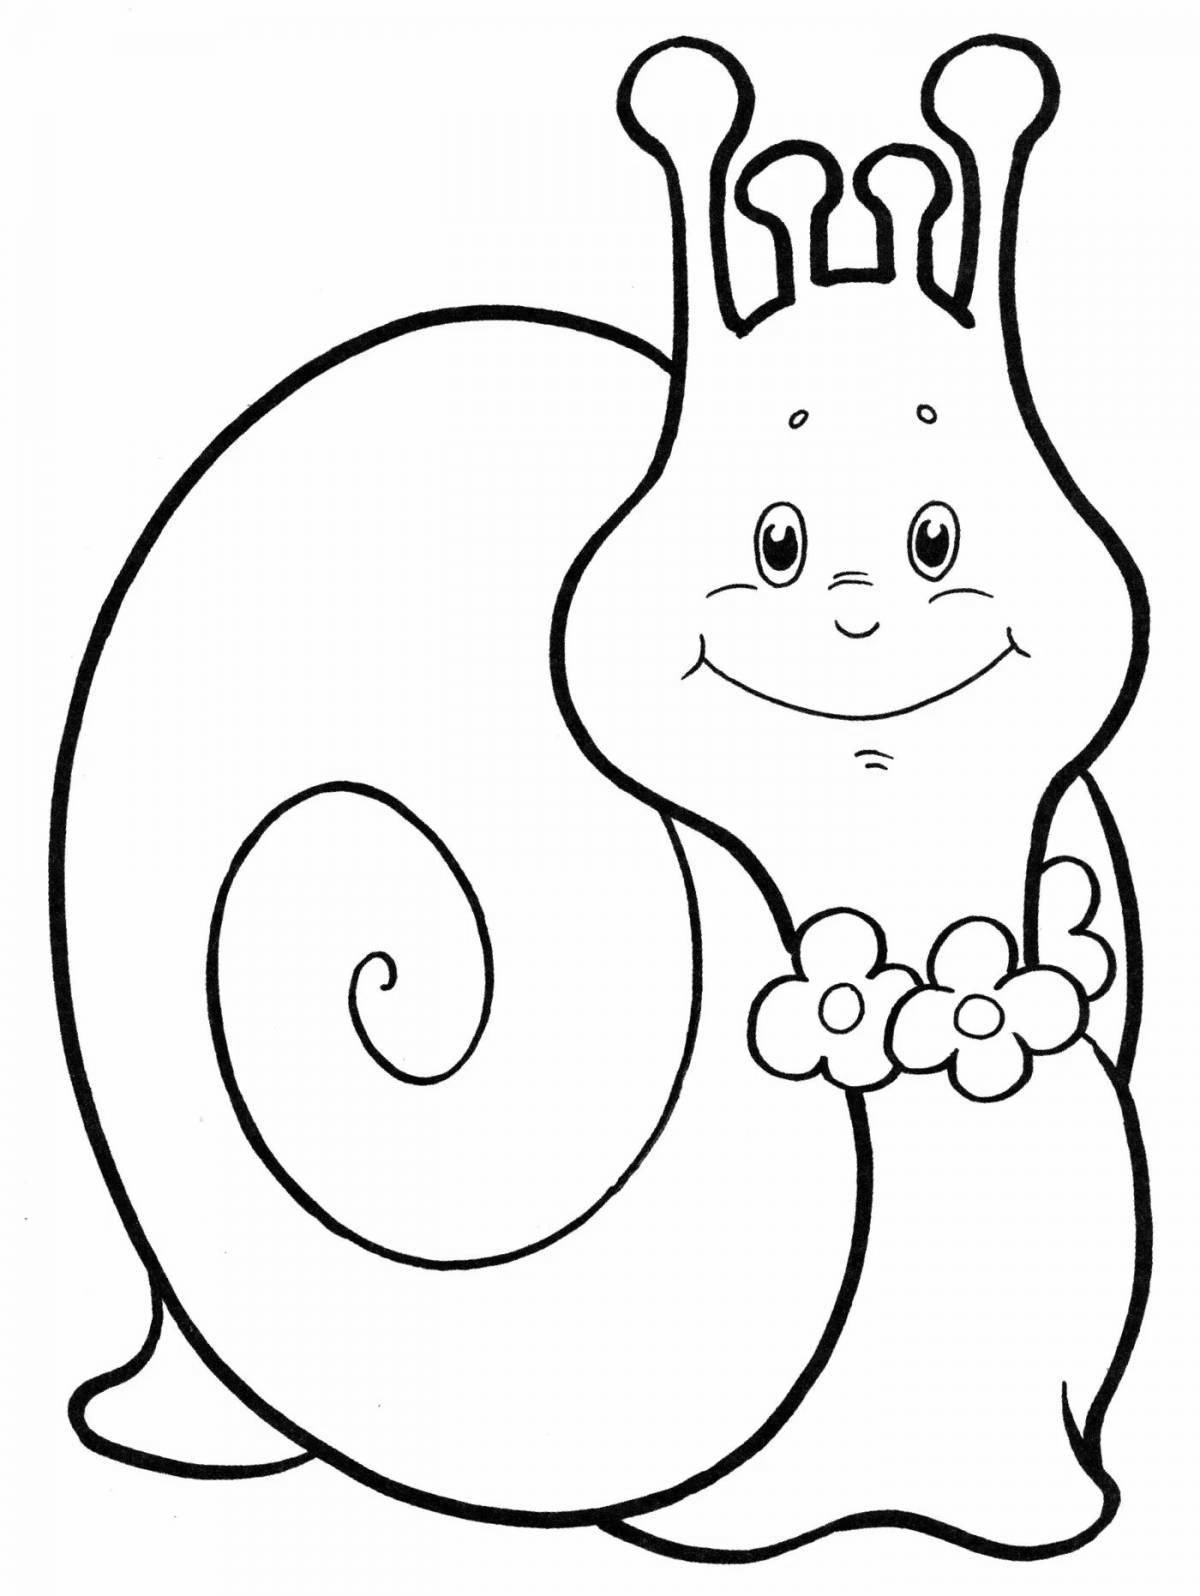 Fun coloring snail for pre-k